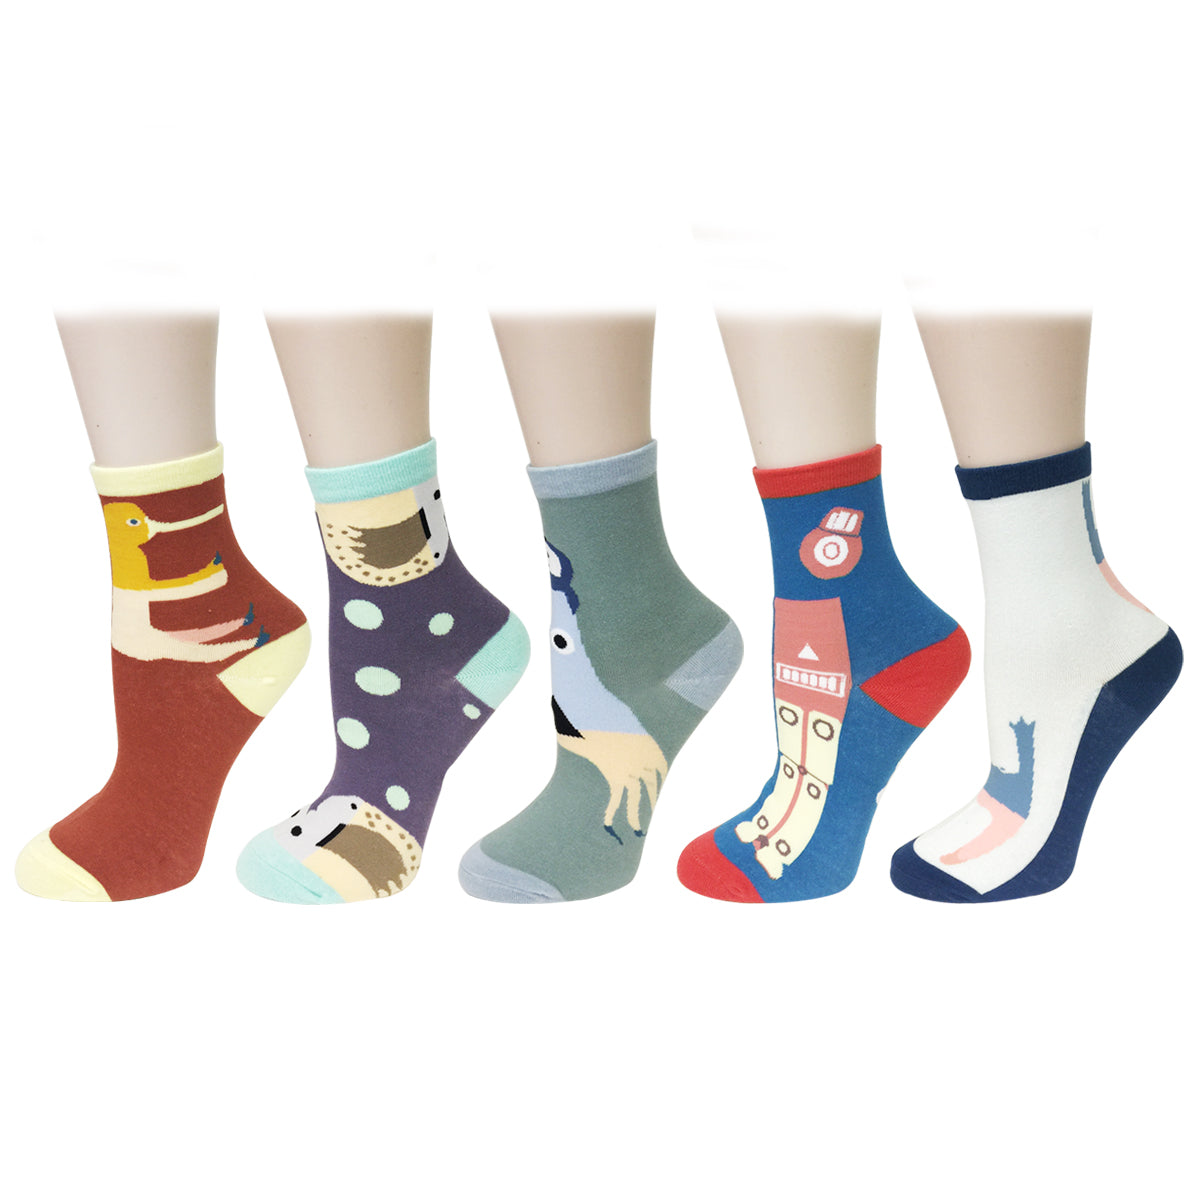 Wrapables Fun Designs Crew Socks for Women (Set of 5)